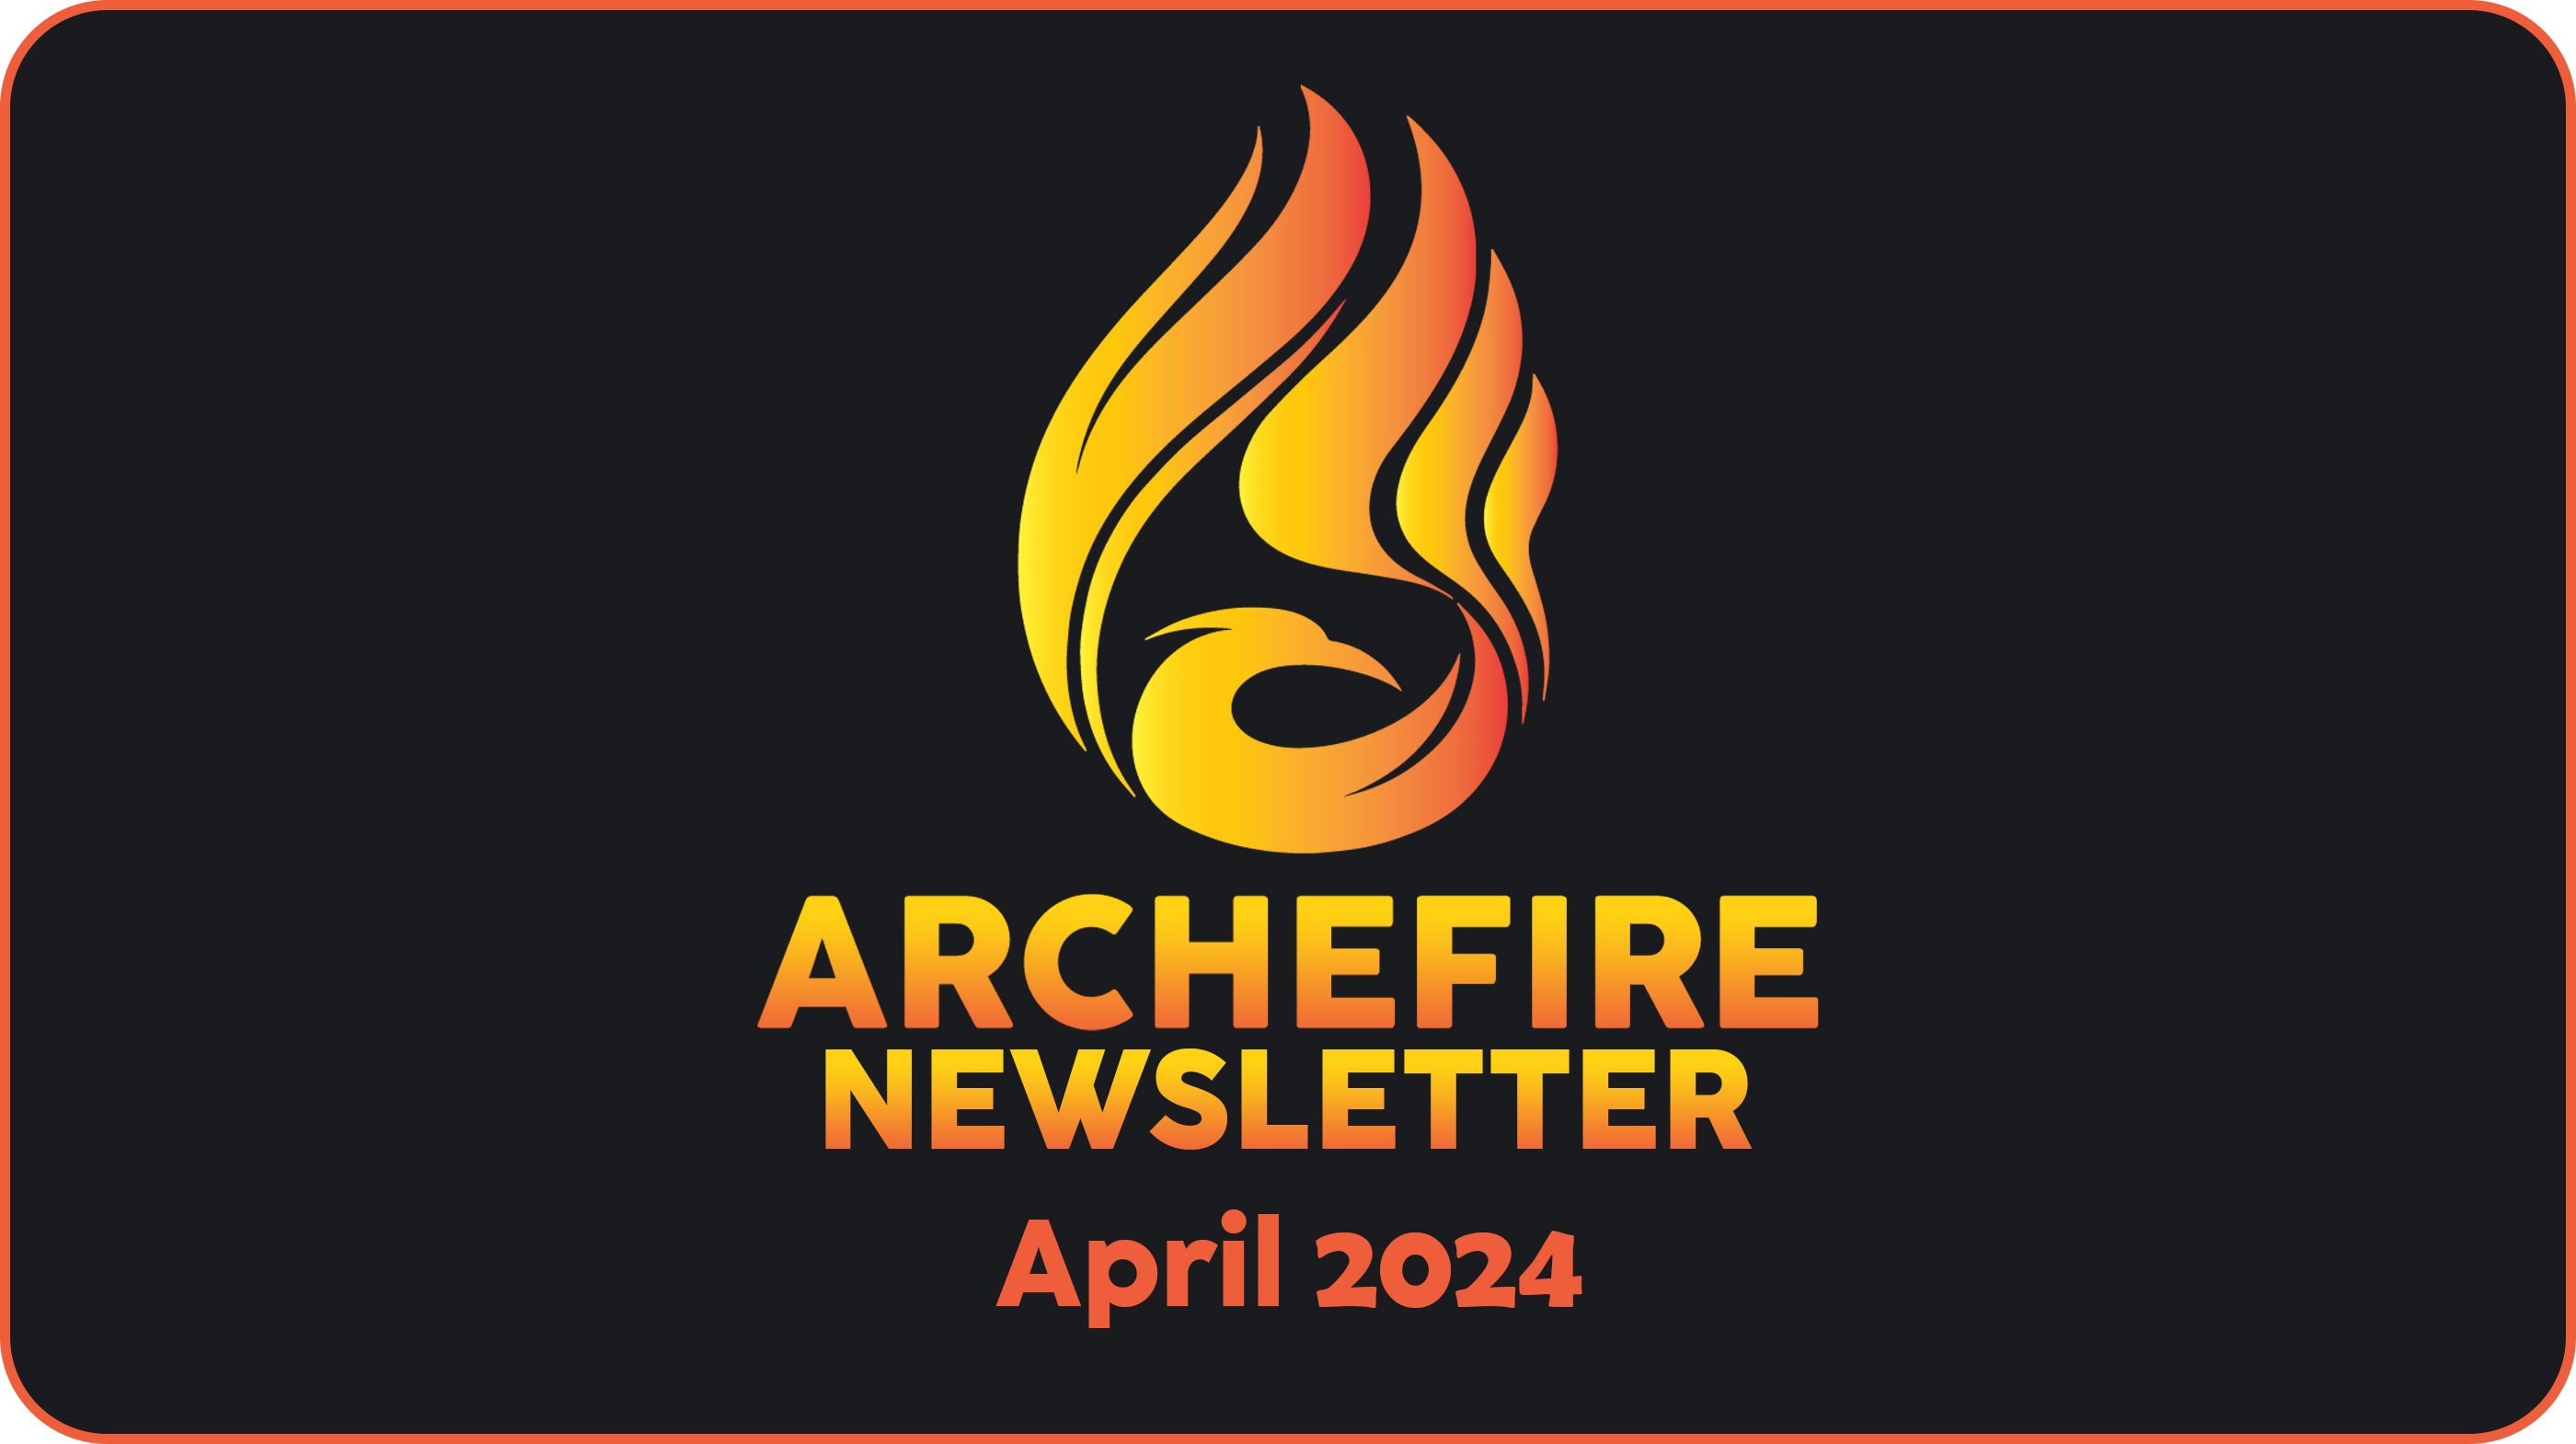 Archefire Newsletter - April 2024